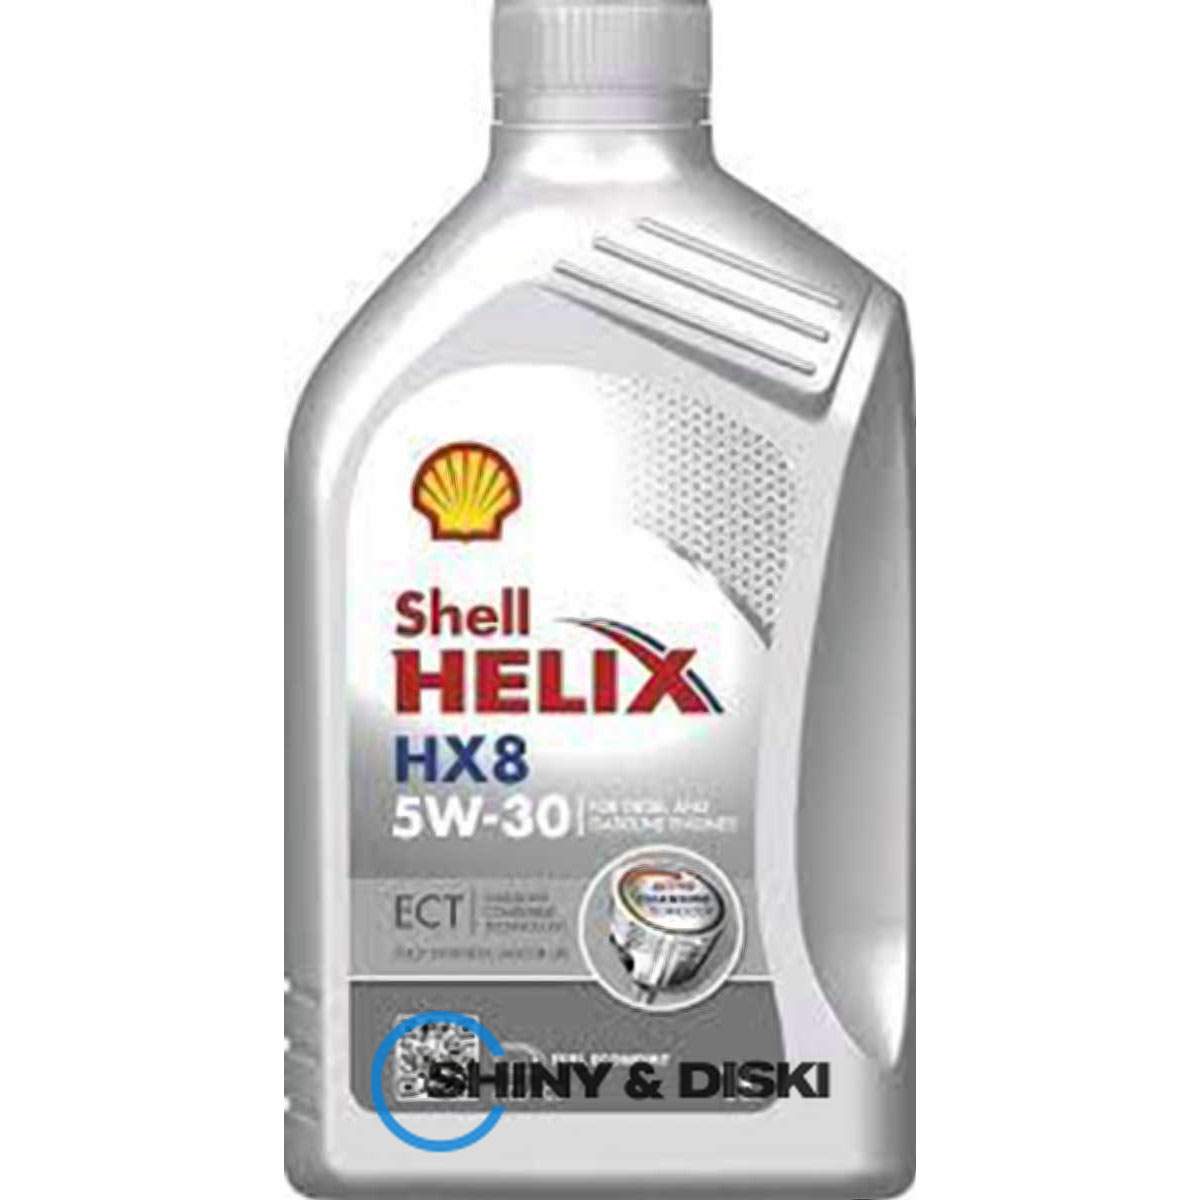 shell helix hx8 ect c3+oem 5w-30 (1л)